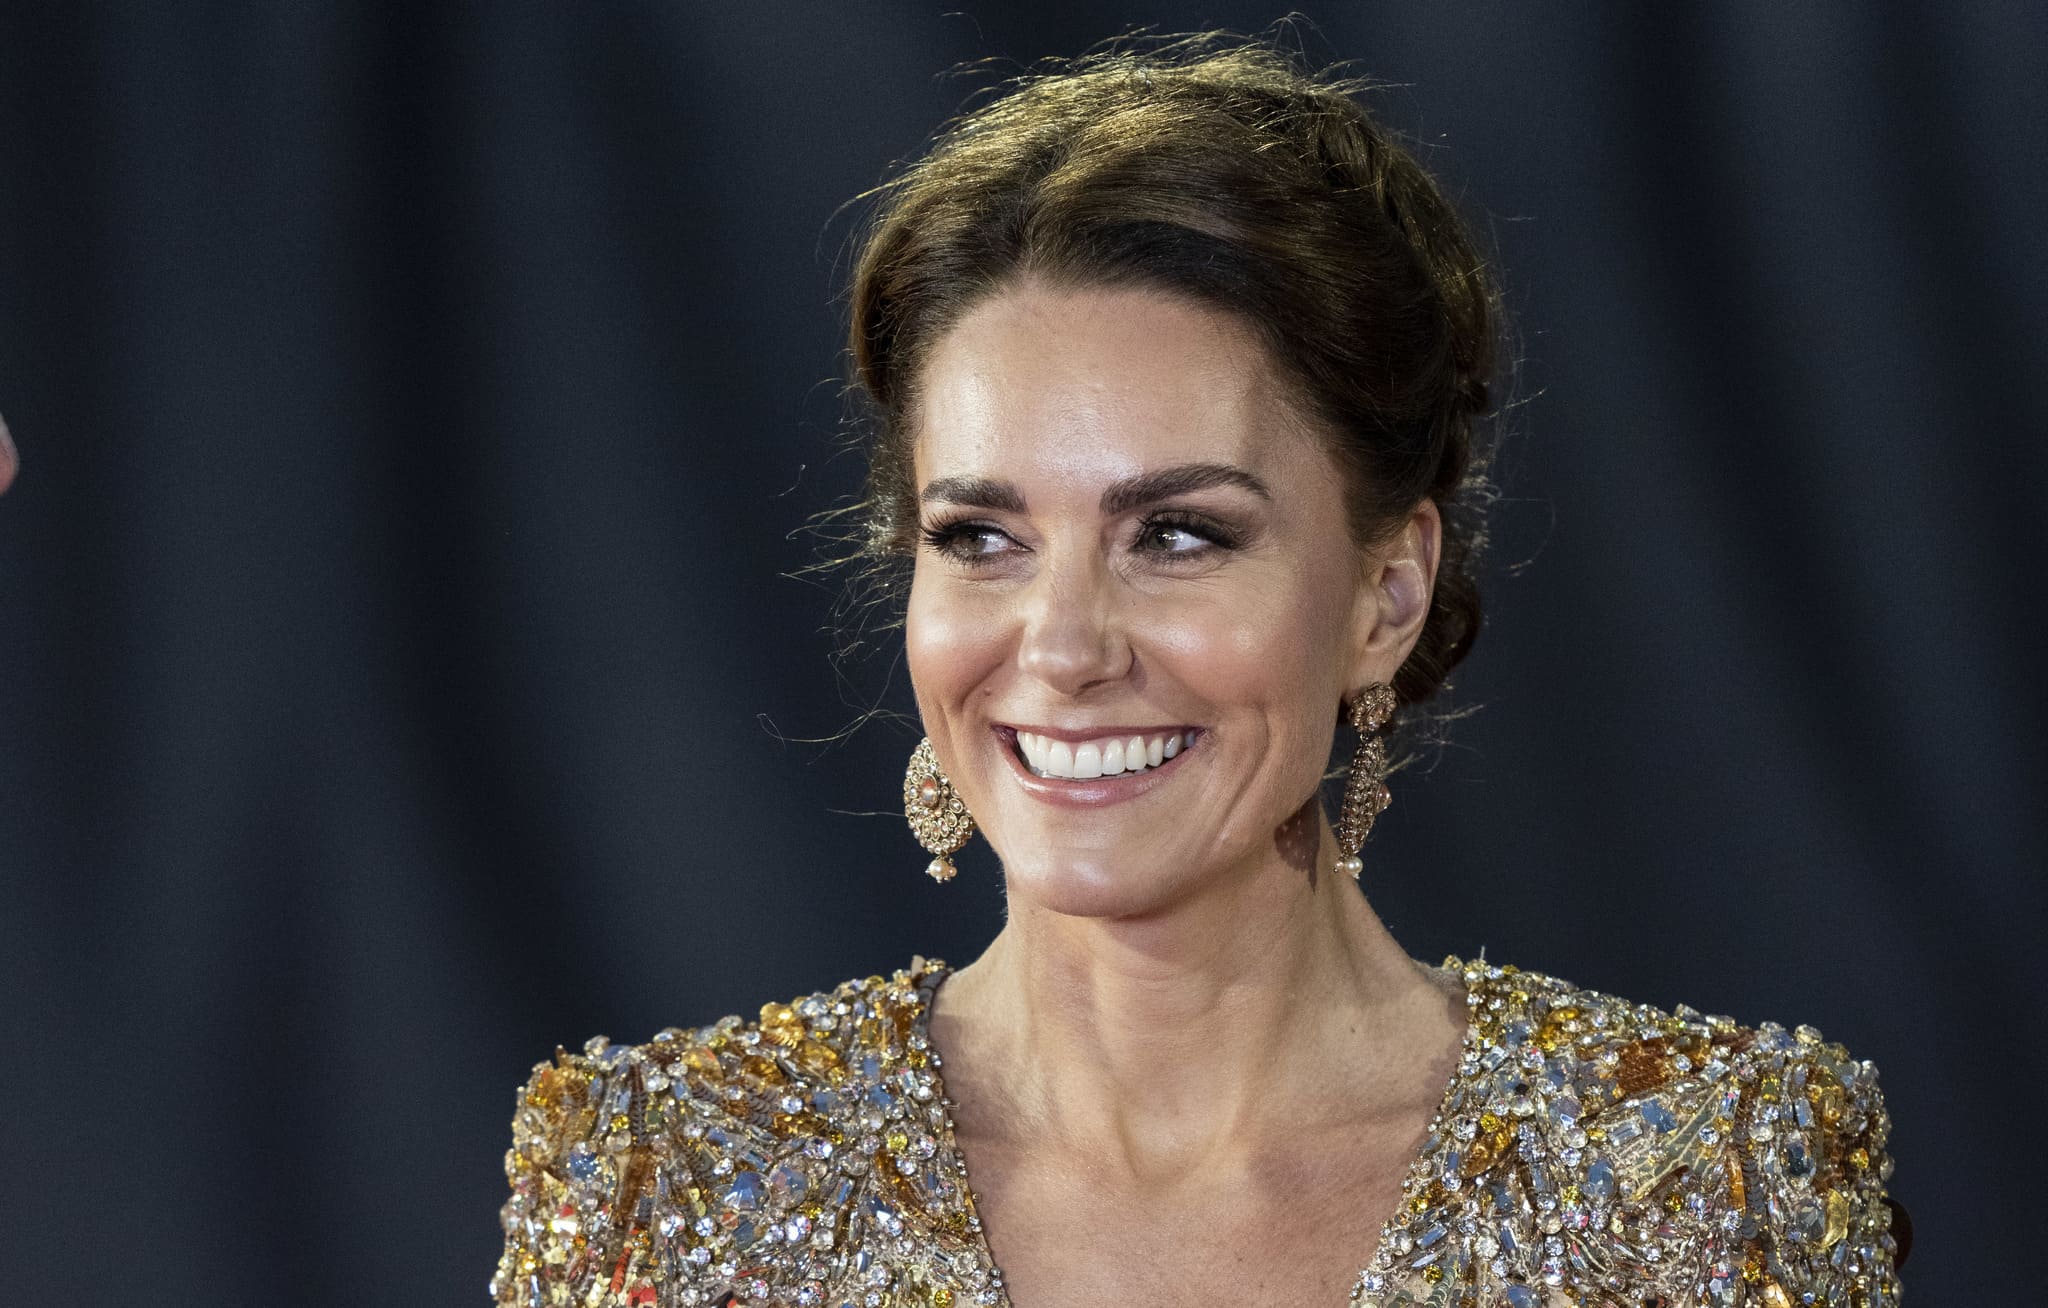 Popularidad de Kate Middleton se dispara en Reino Unido tras revelar cáncer